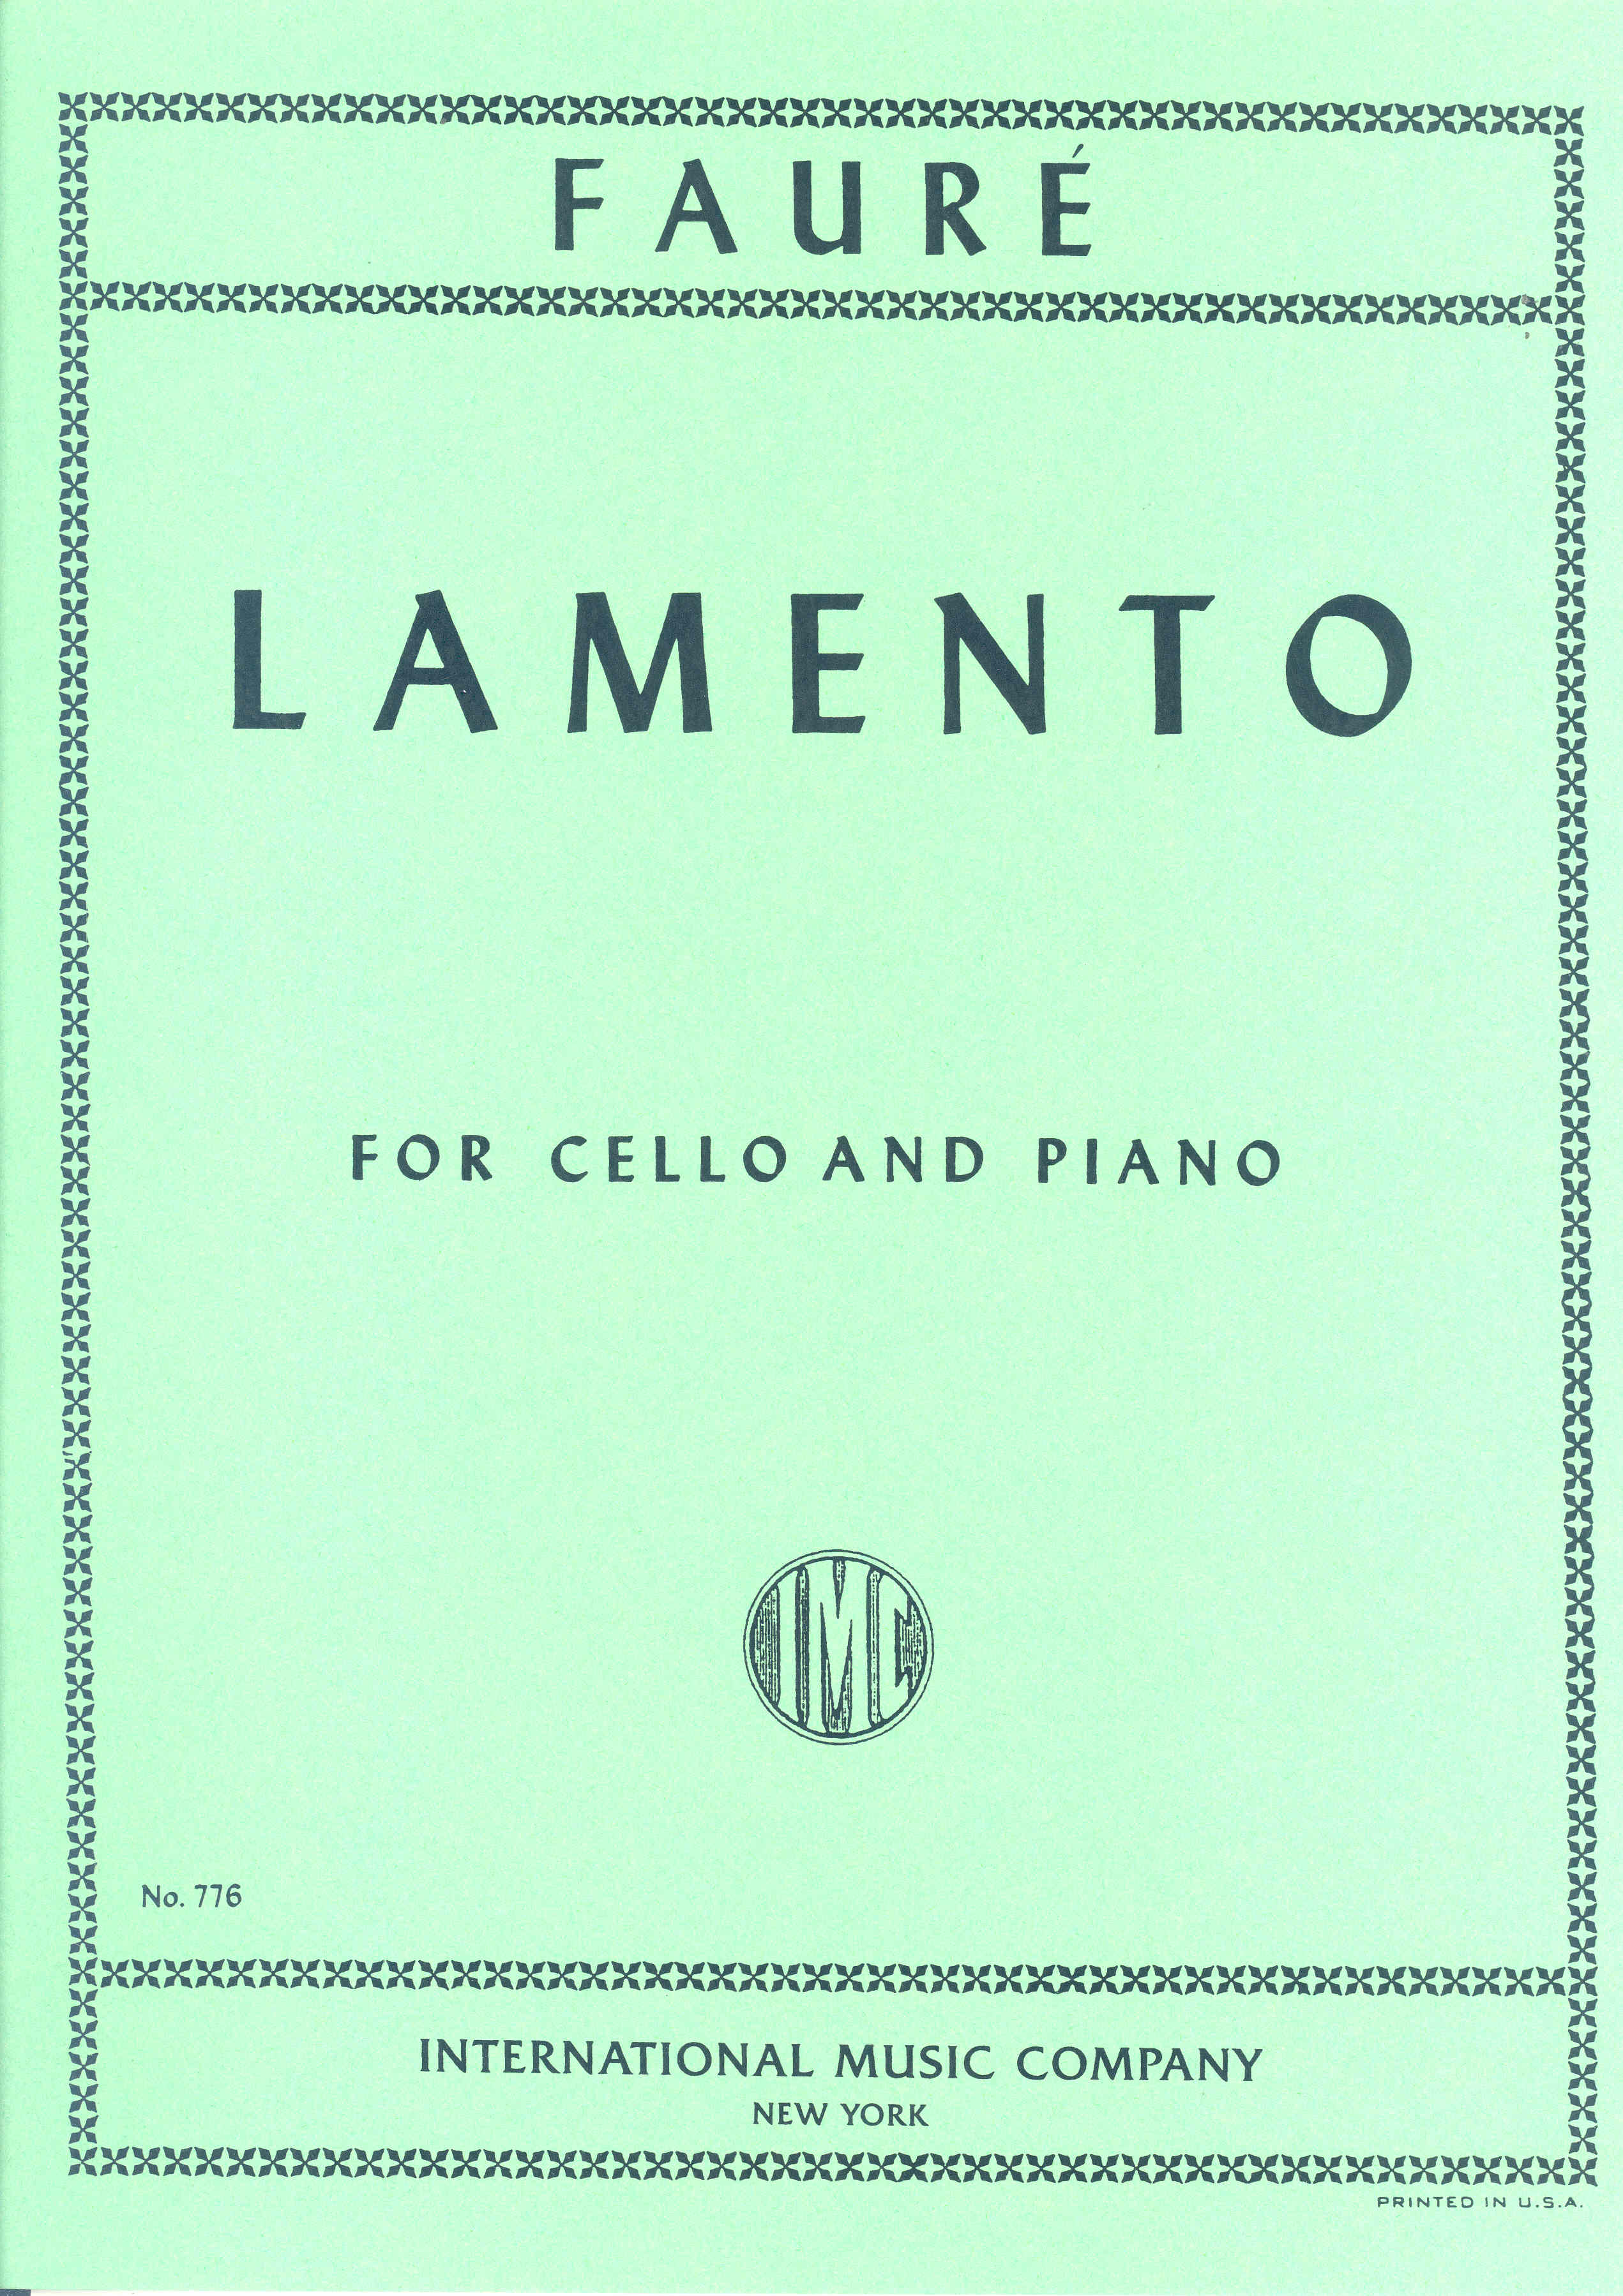 Faure Lamento Casella Cello Sheet Music Songbook